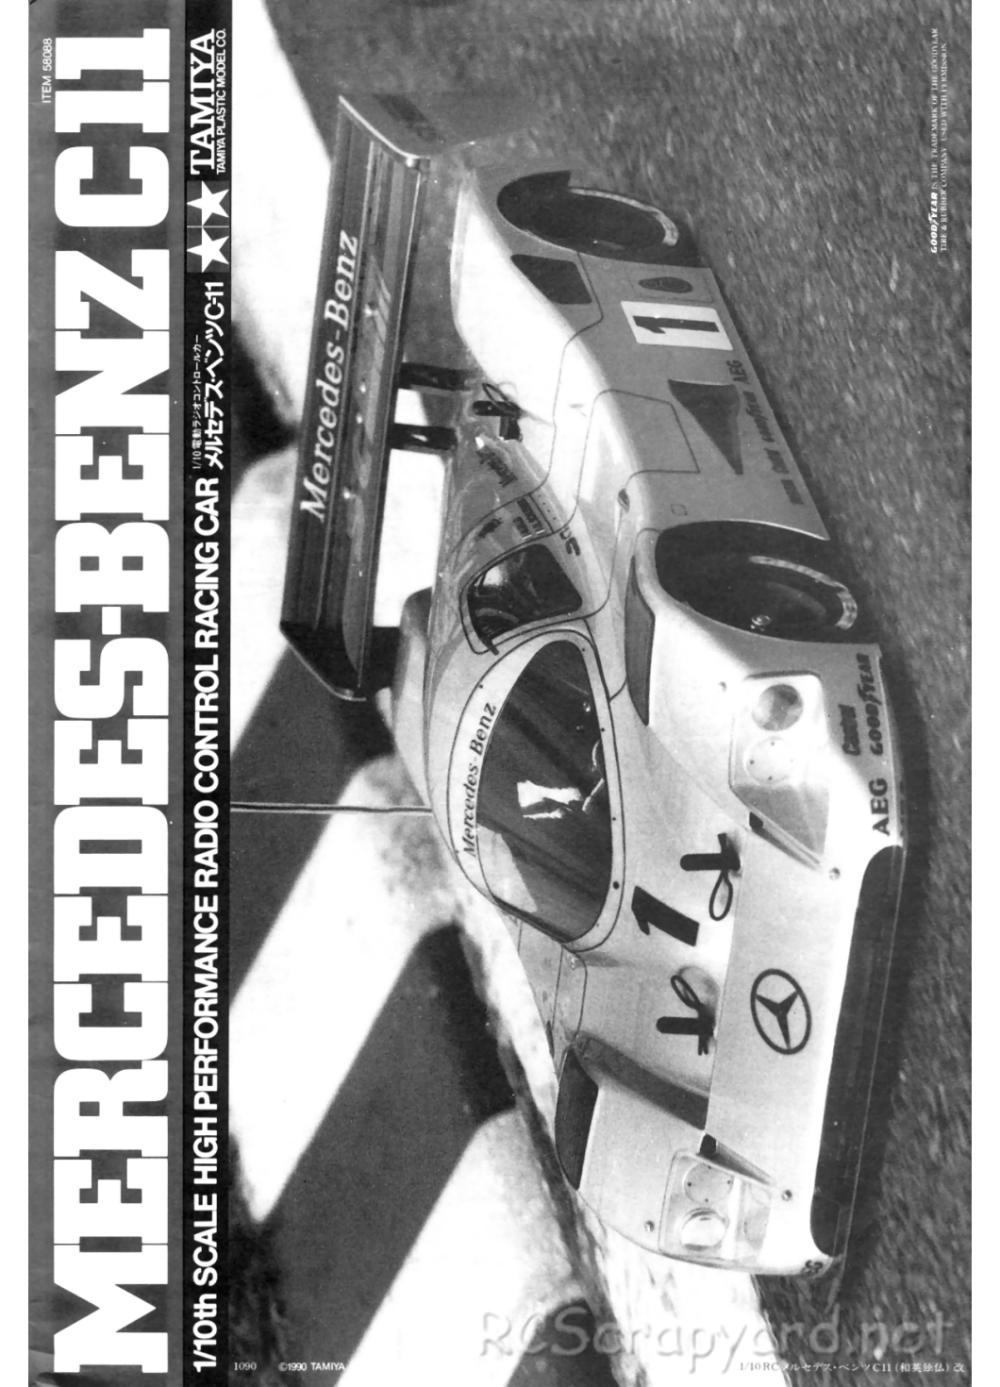 Tamiya - Mercedes Benz C11 - 58088 - Manual